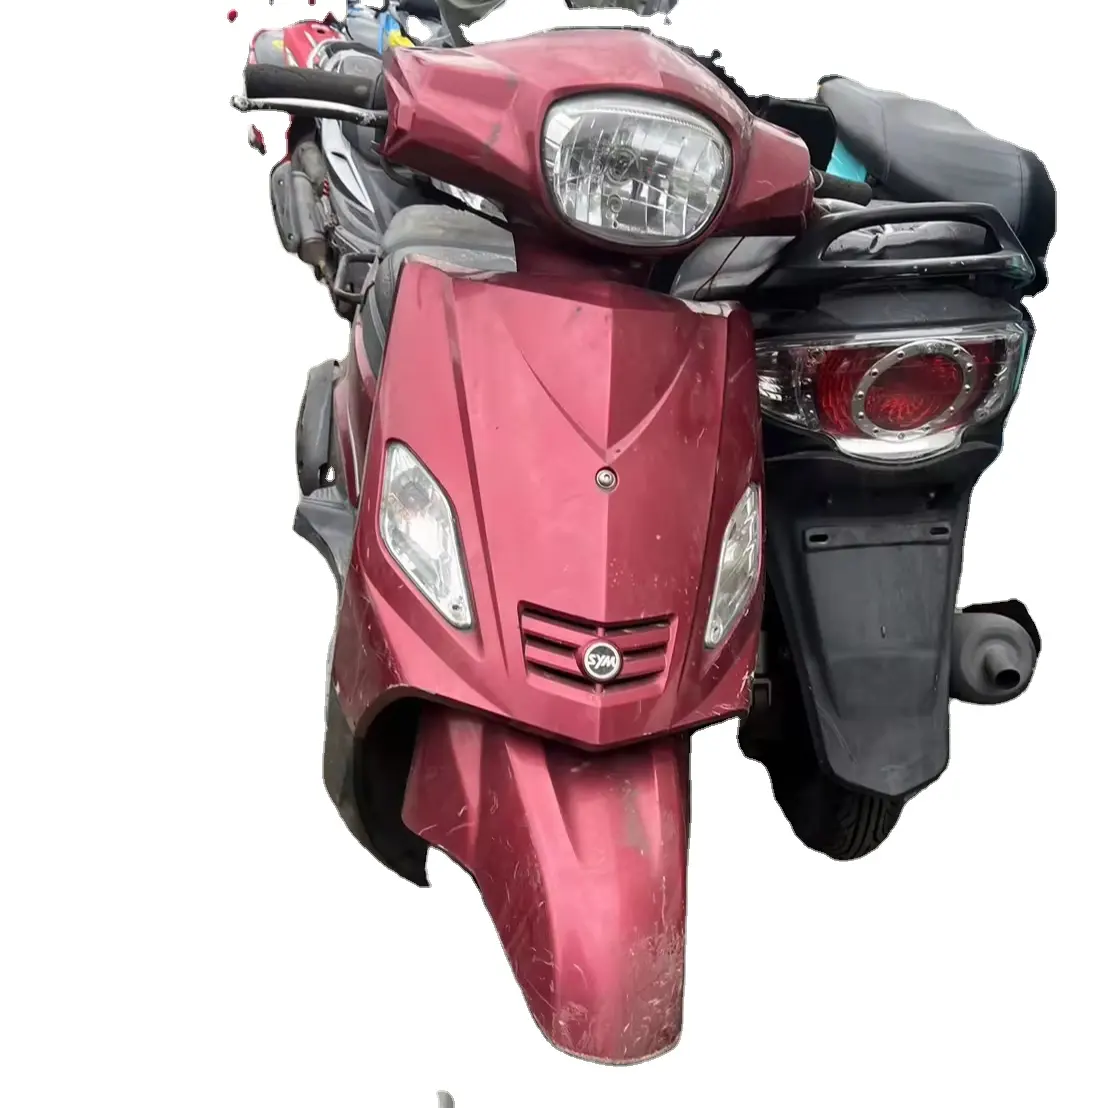 Подержанные мотоциклы kymco yamaha fromTaiwan 150cc 125cc 100cc